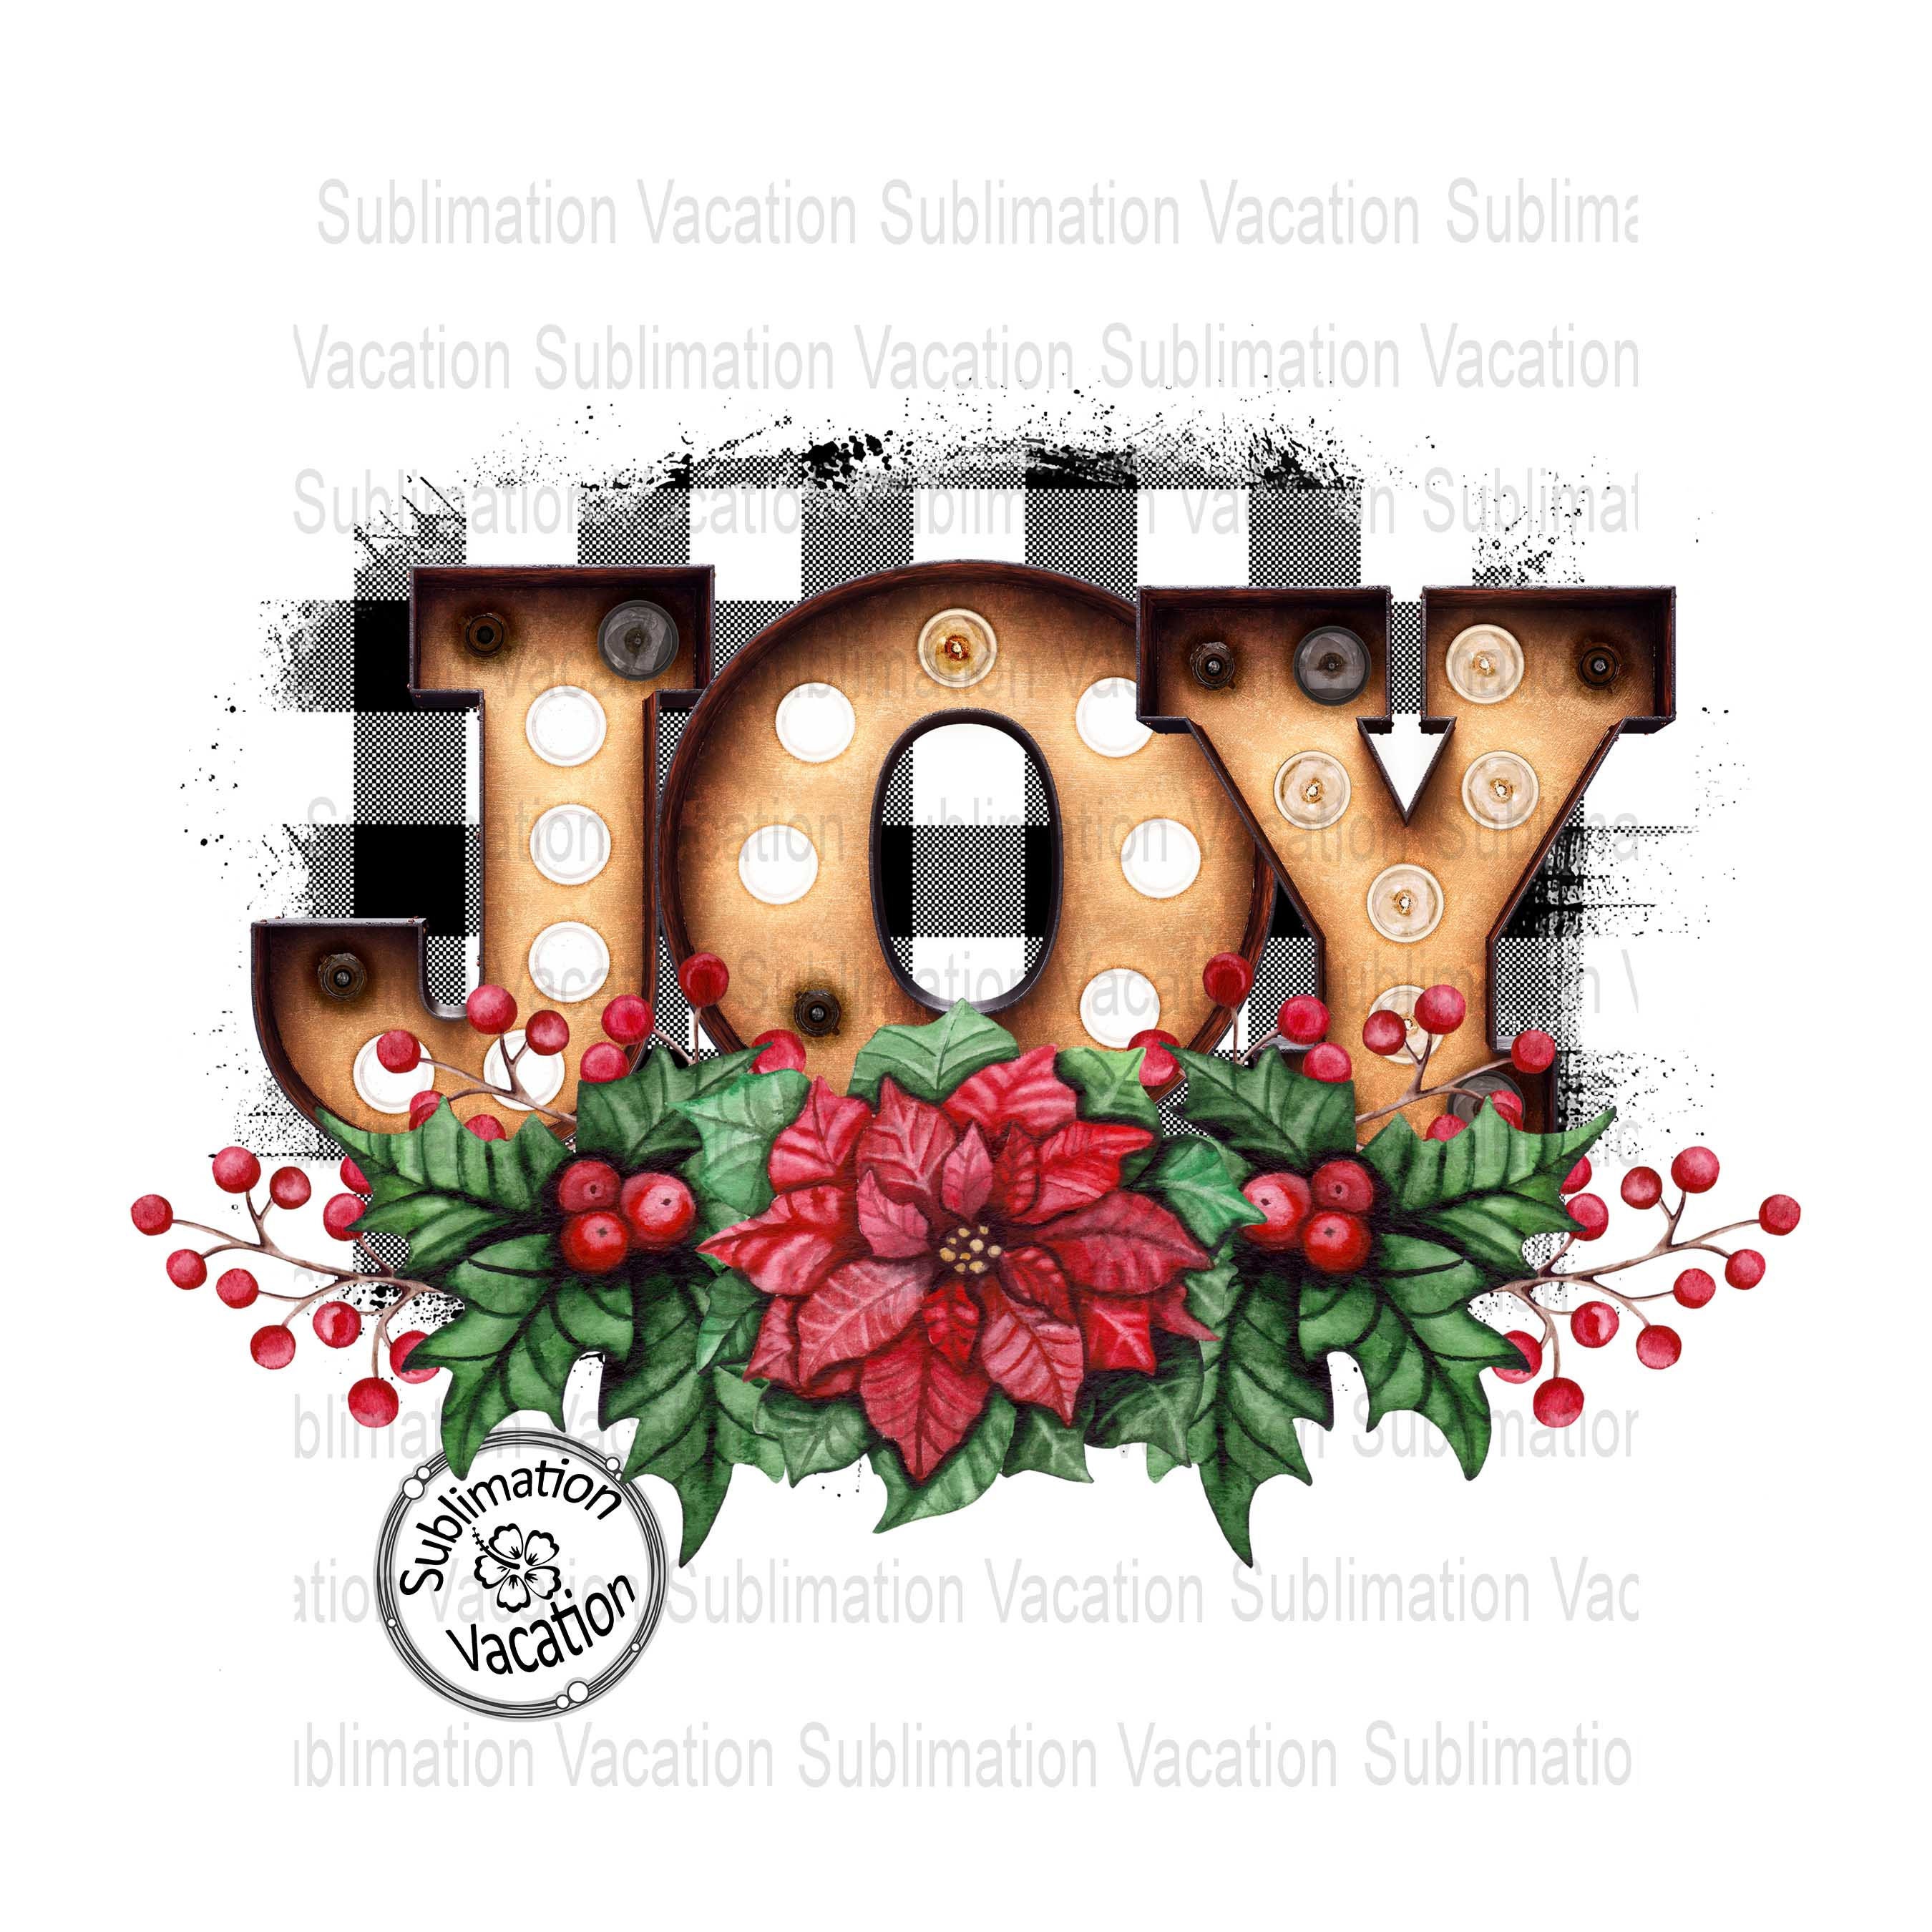 Download Christmas Sublimation Download Joy Design Download Joy Sublimation Design Christmas Sublimation Design Christmas Sublimation Designs Joy Craft Supplies Tools Sewing Needlecraft Delage Com Br